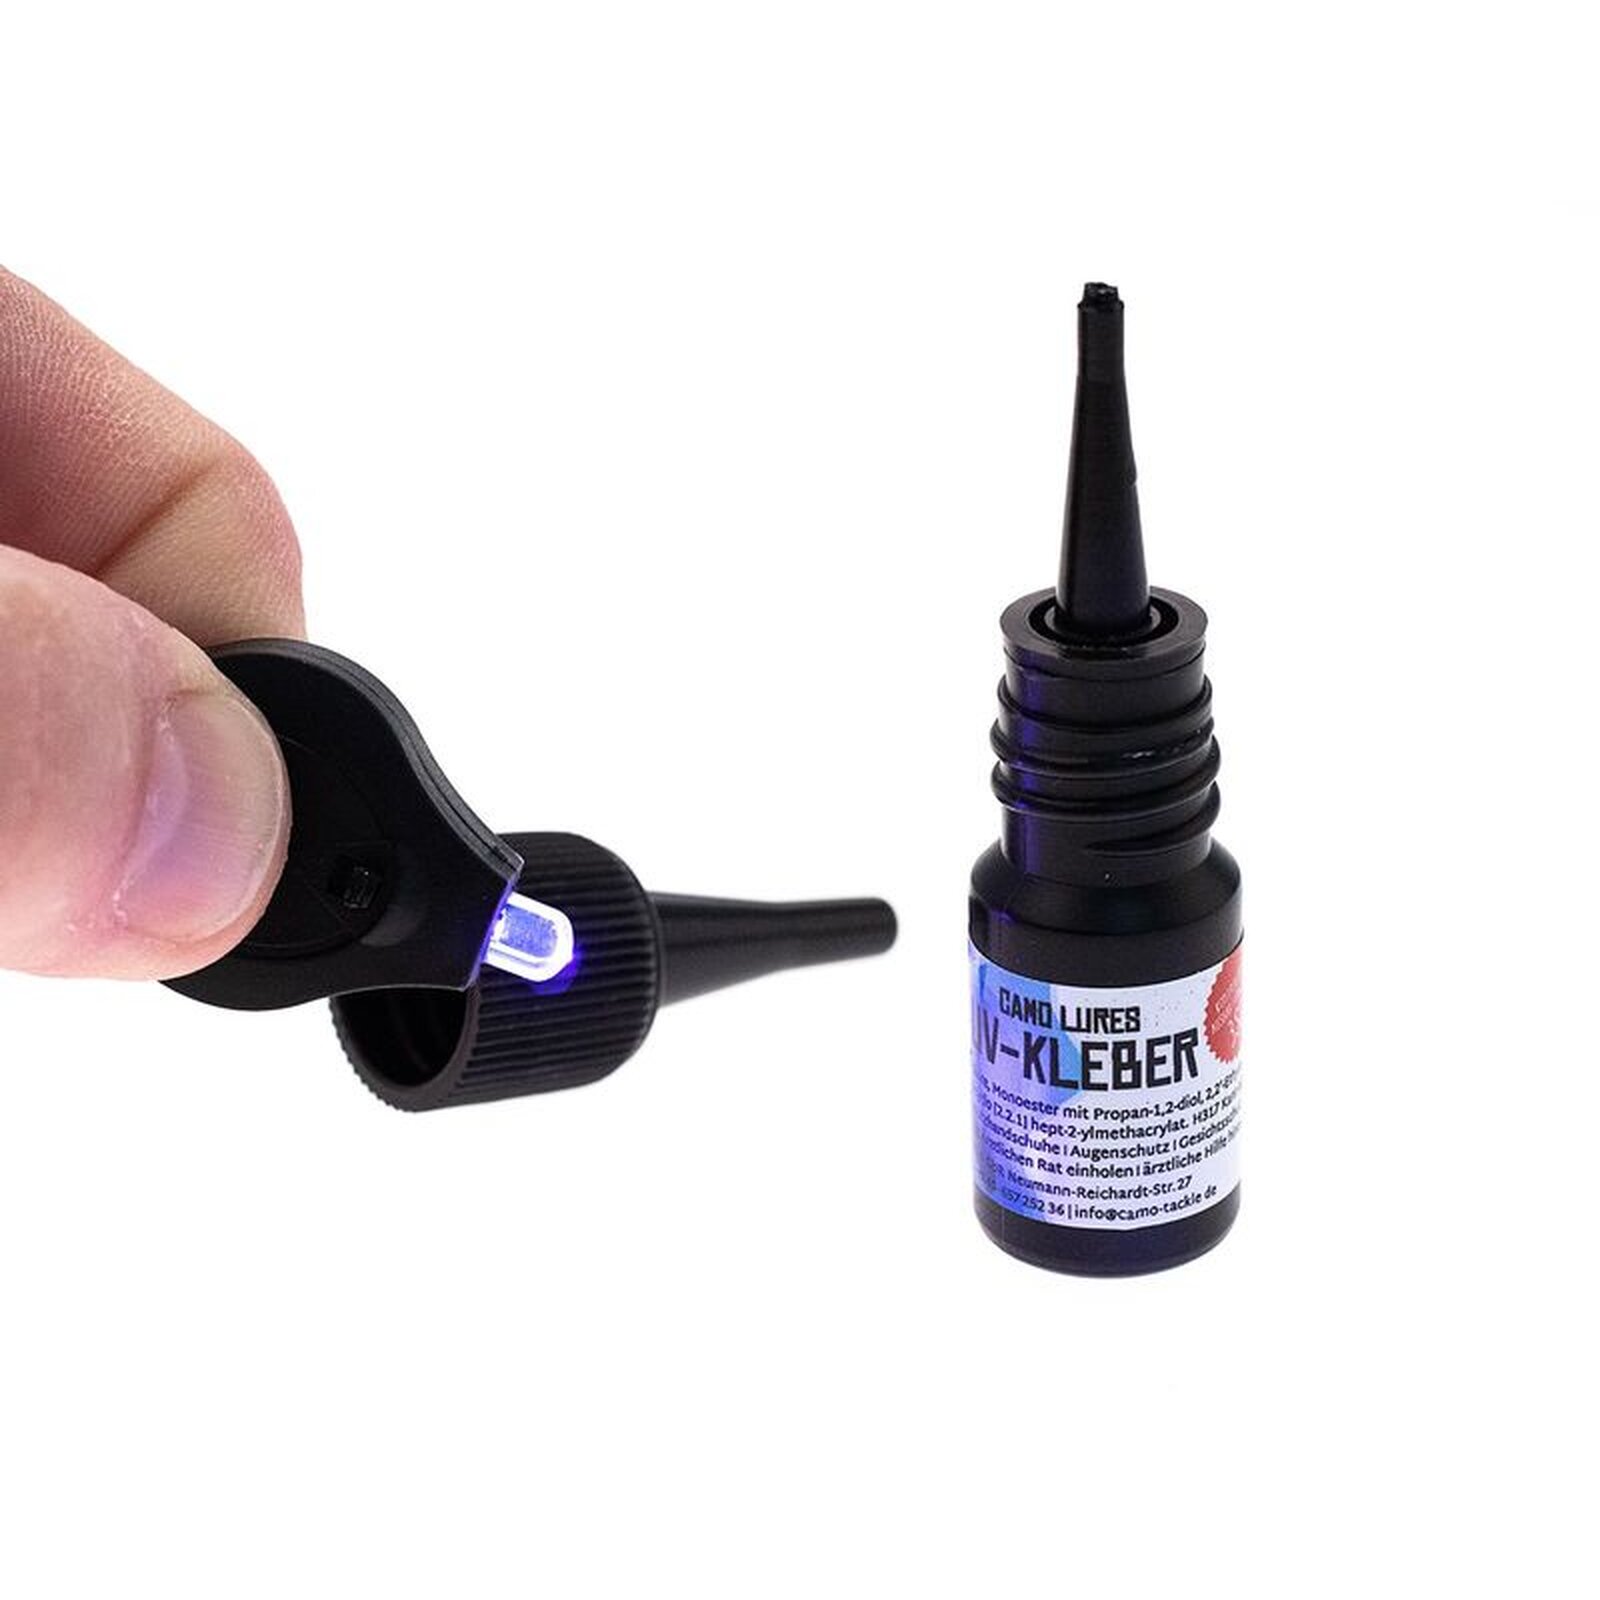 Camo Lures UV-Kleber mit UV-Beamer